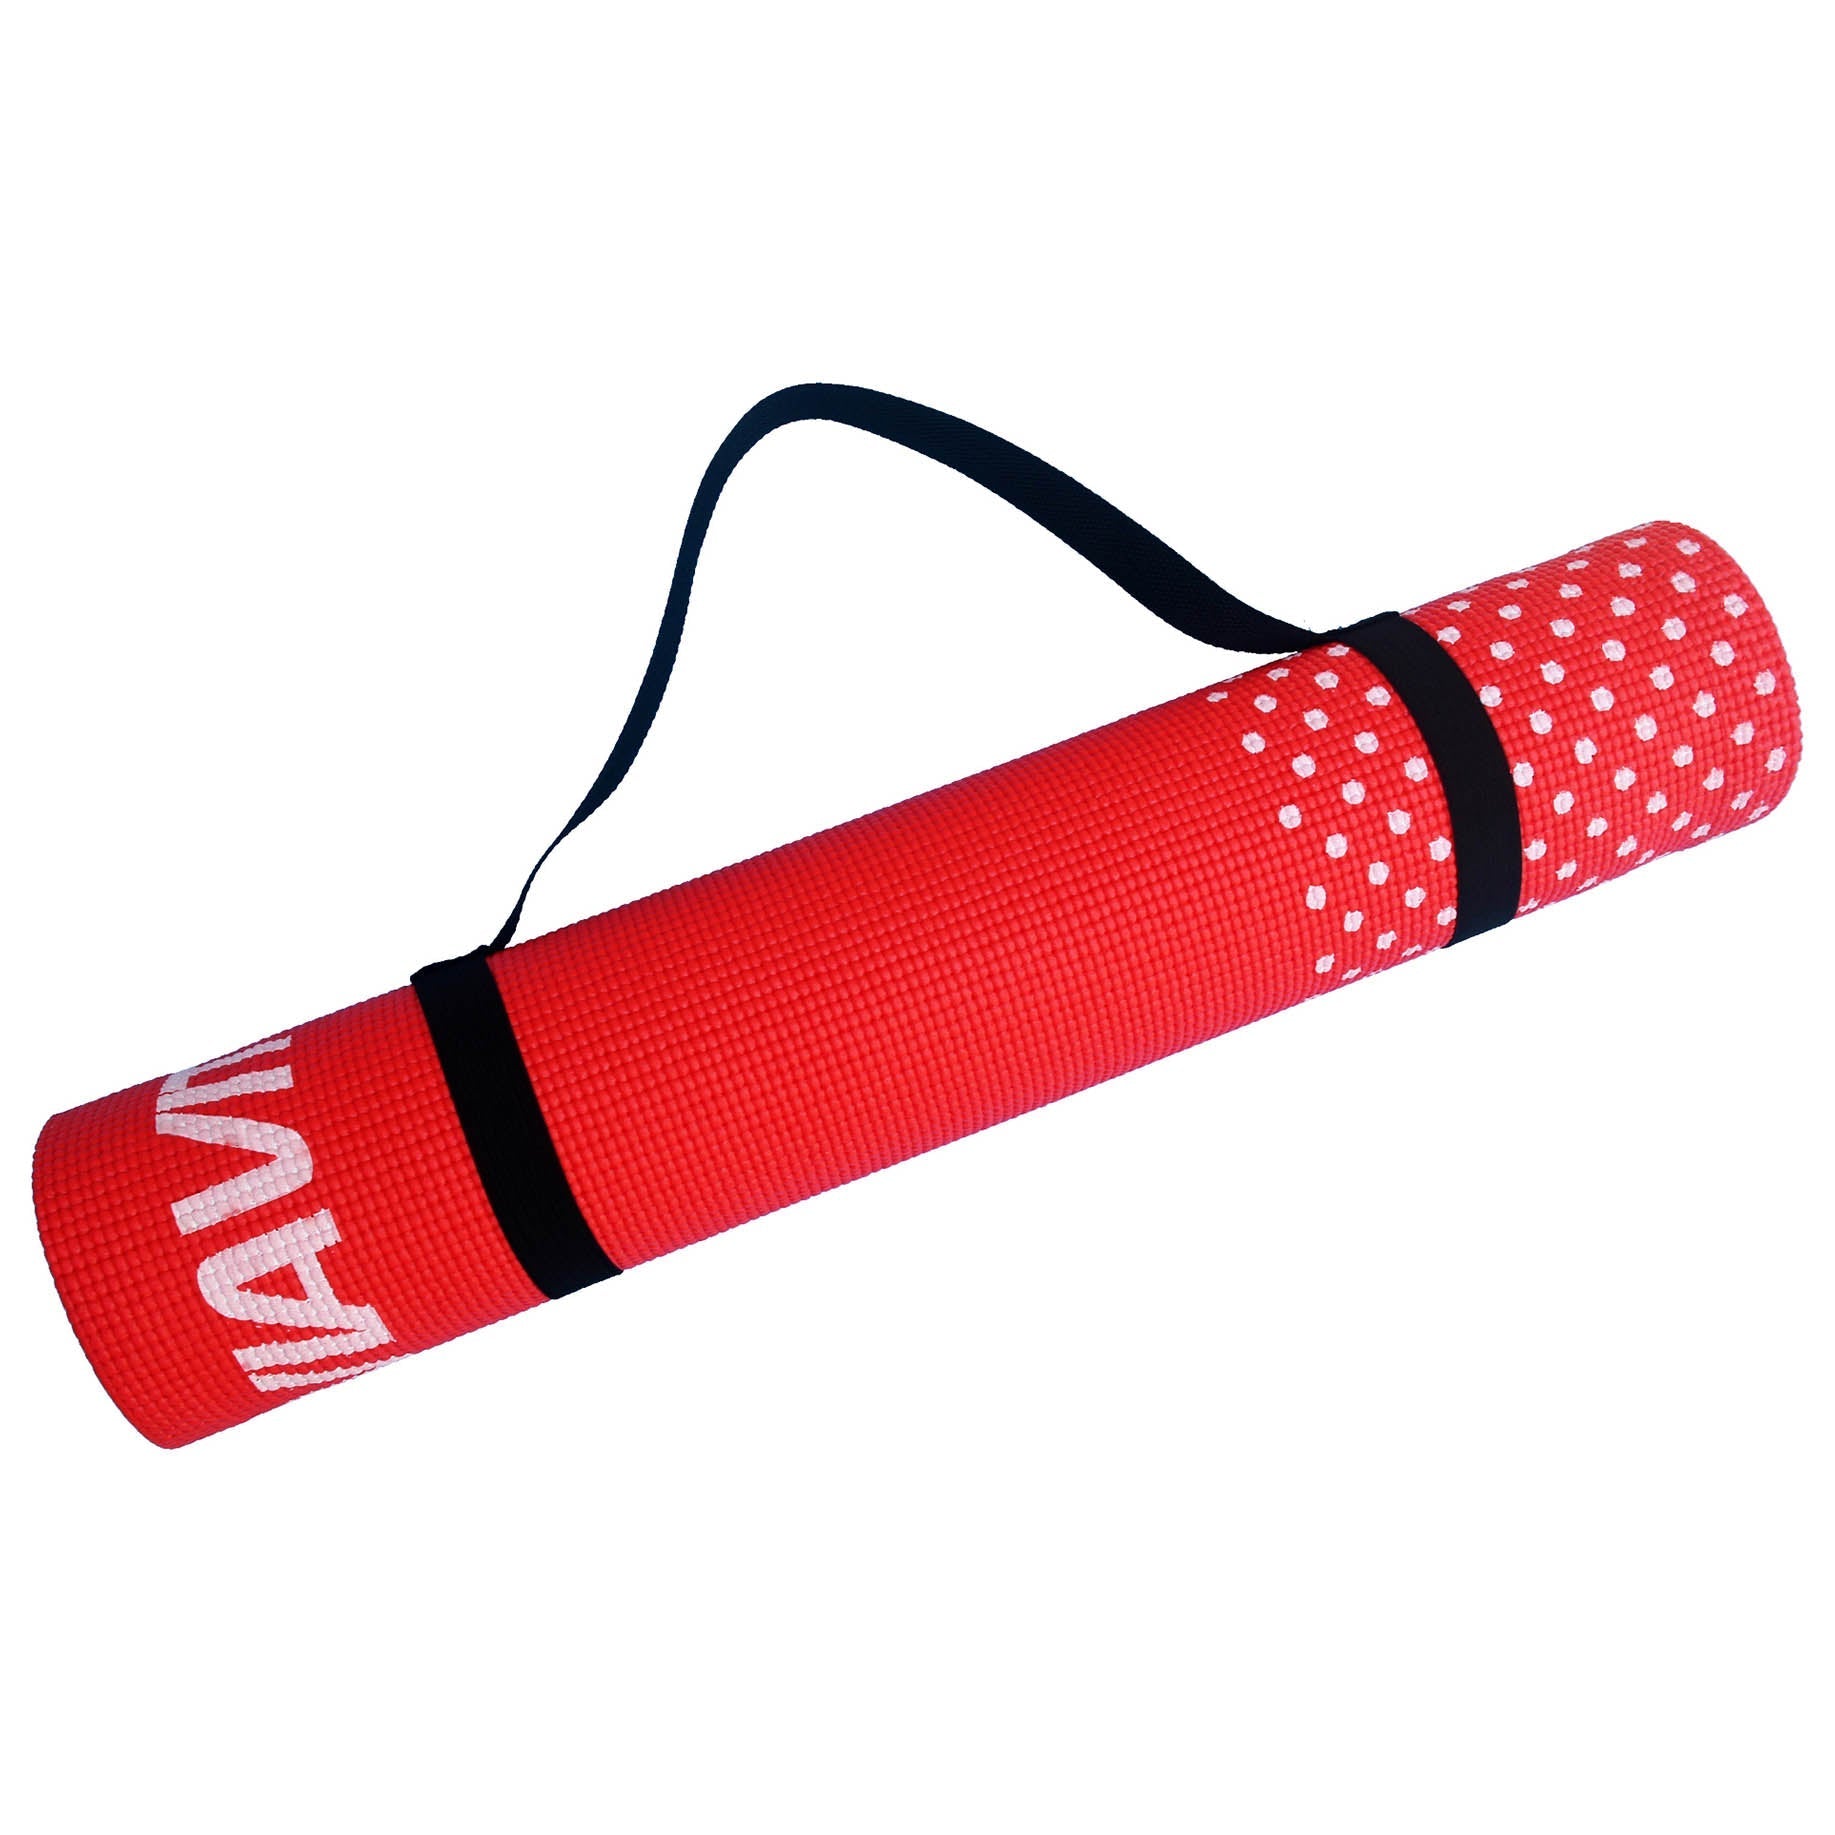 HemingWeigh Yoga Kit - Red Yoga Mat Set Includes Carrying Strap